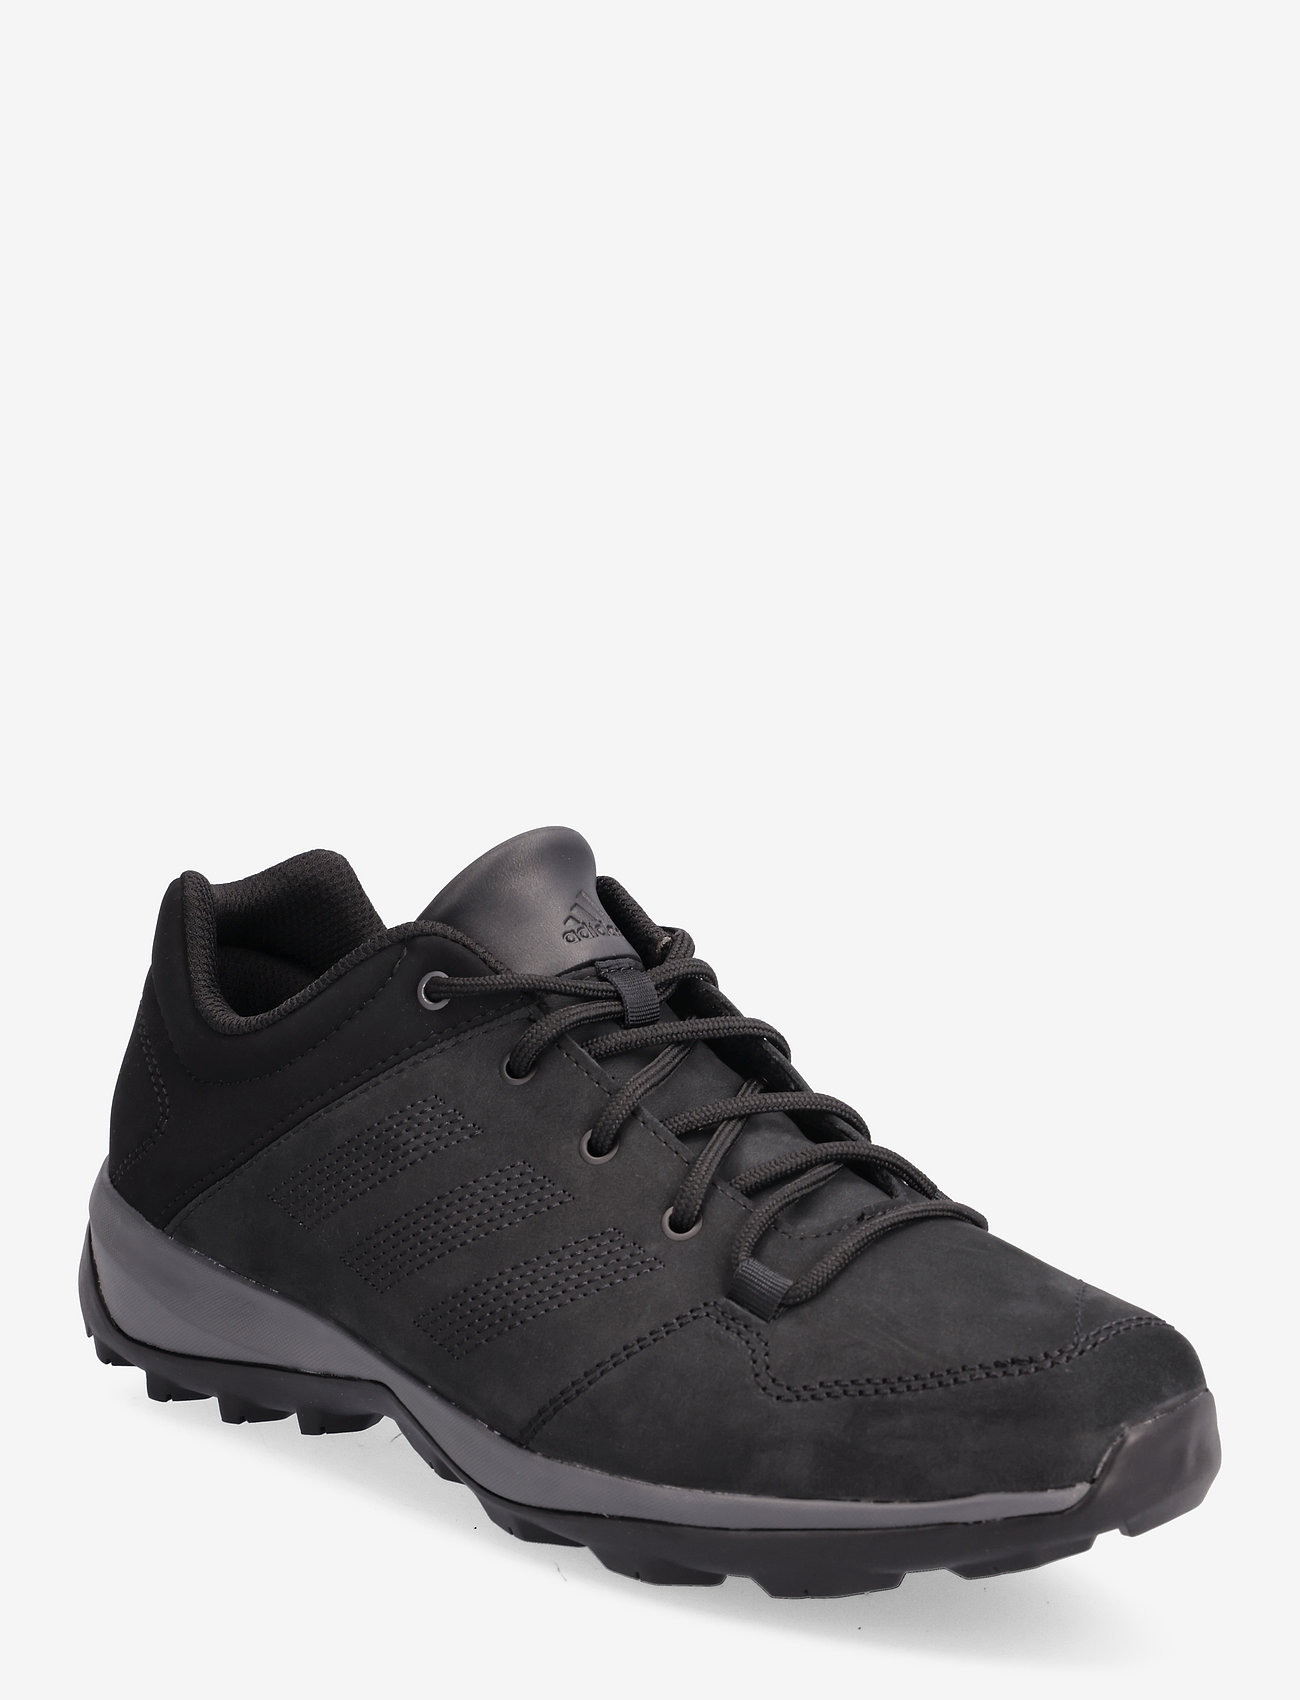 adidas Performance Terrex Daroga Plus Leather Shoes - Hiking/walking shoes | Boozt.com